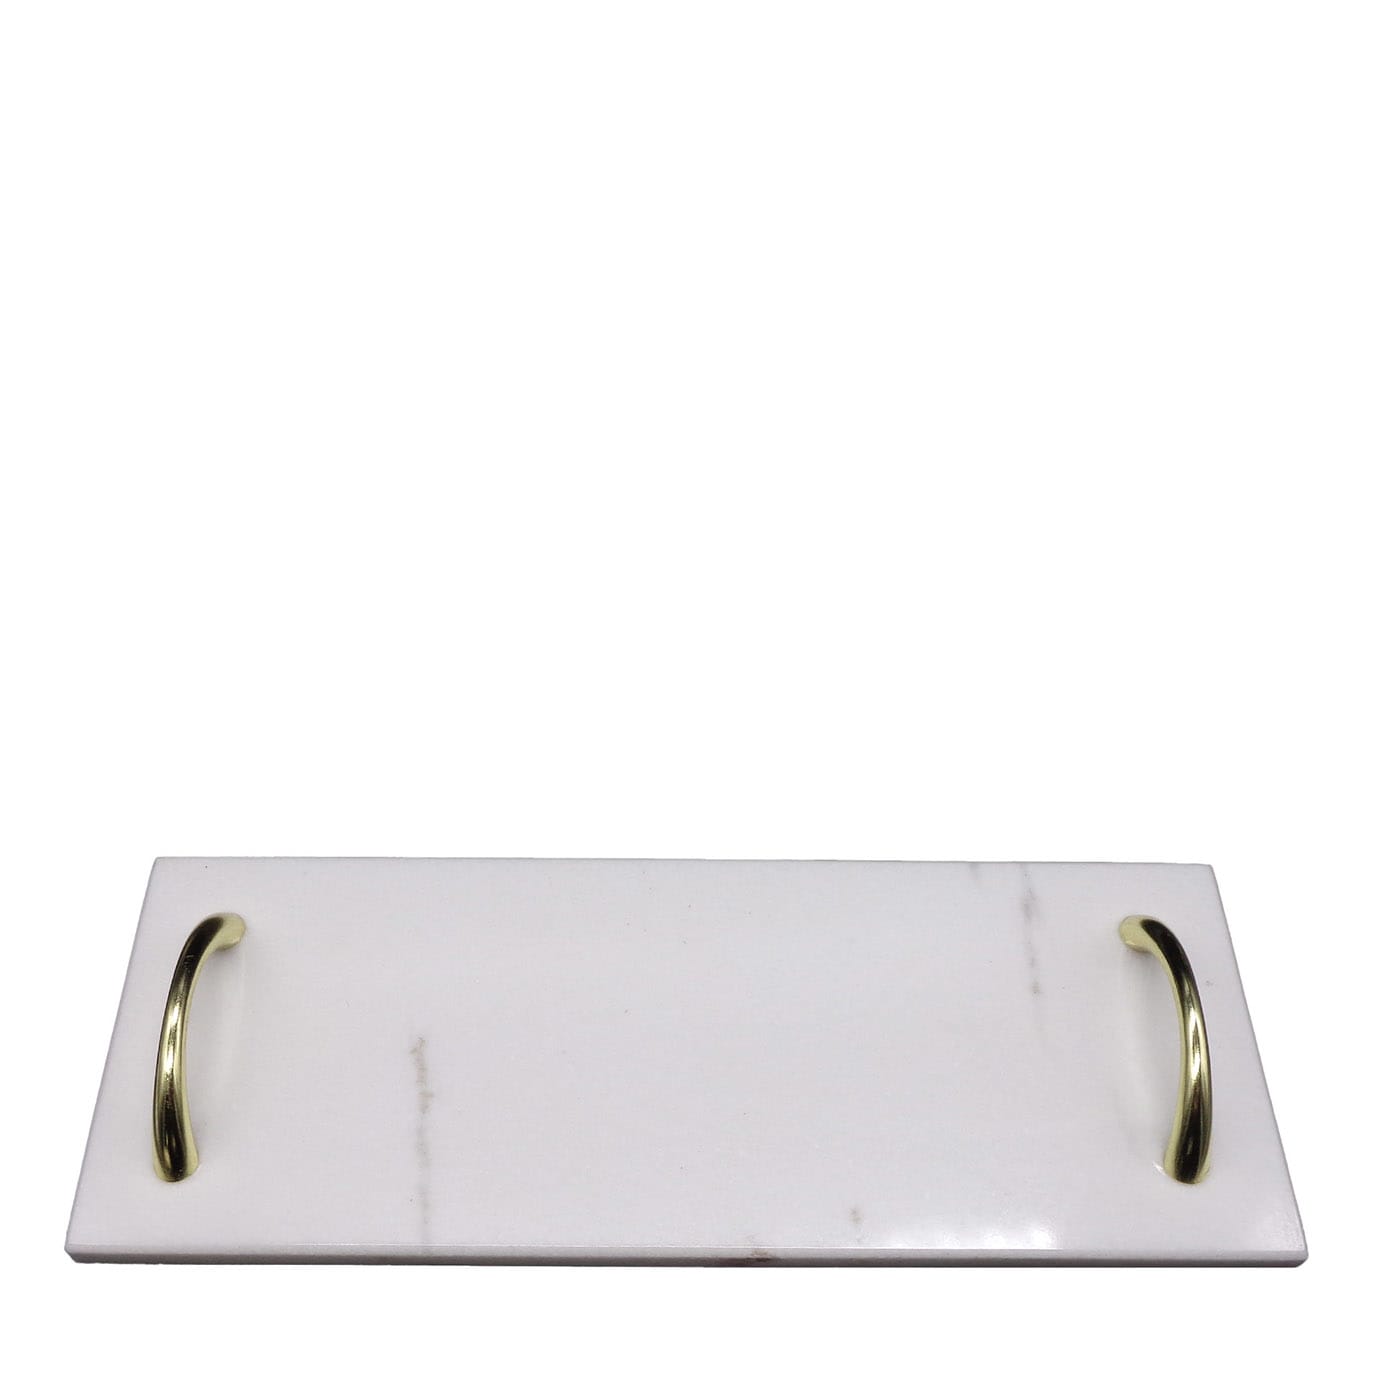 Rectangular White Tiger Tray with Golden Handles - Euromarmi Store